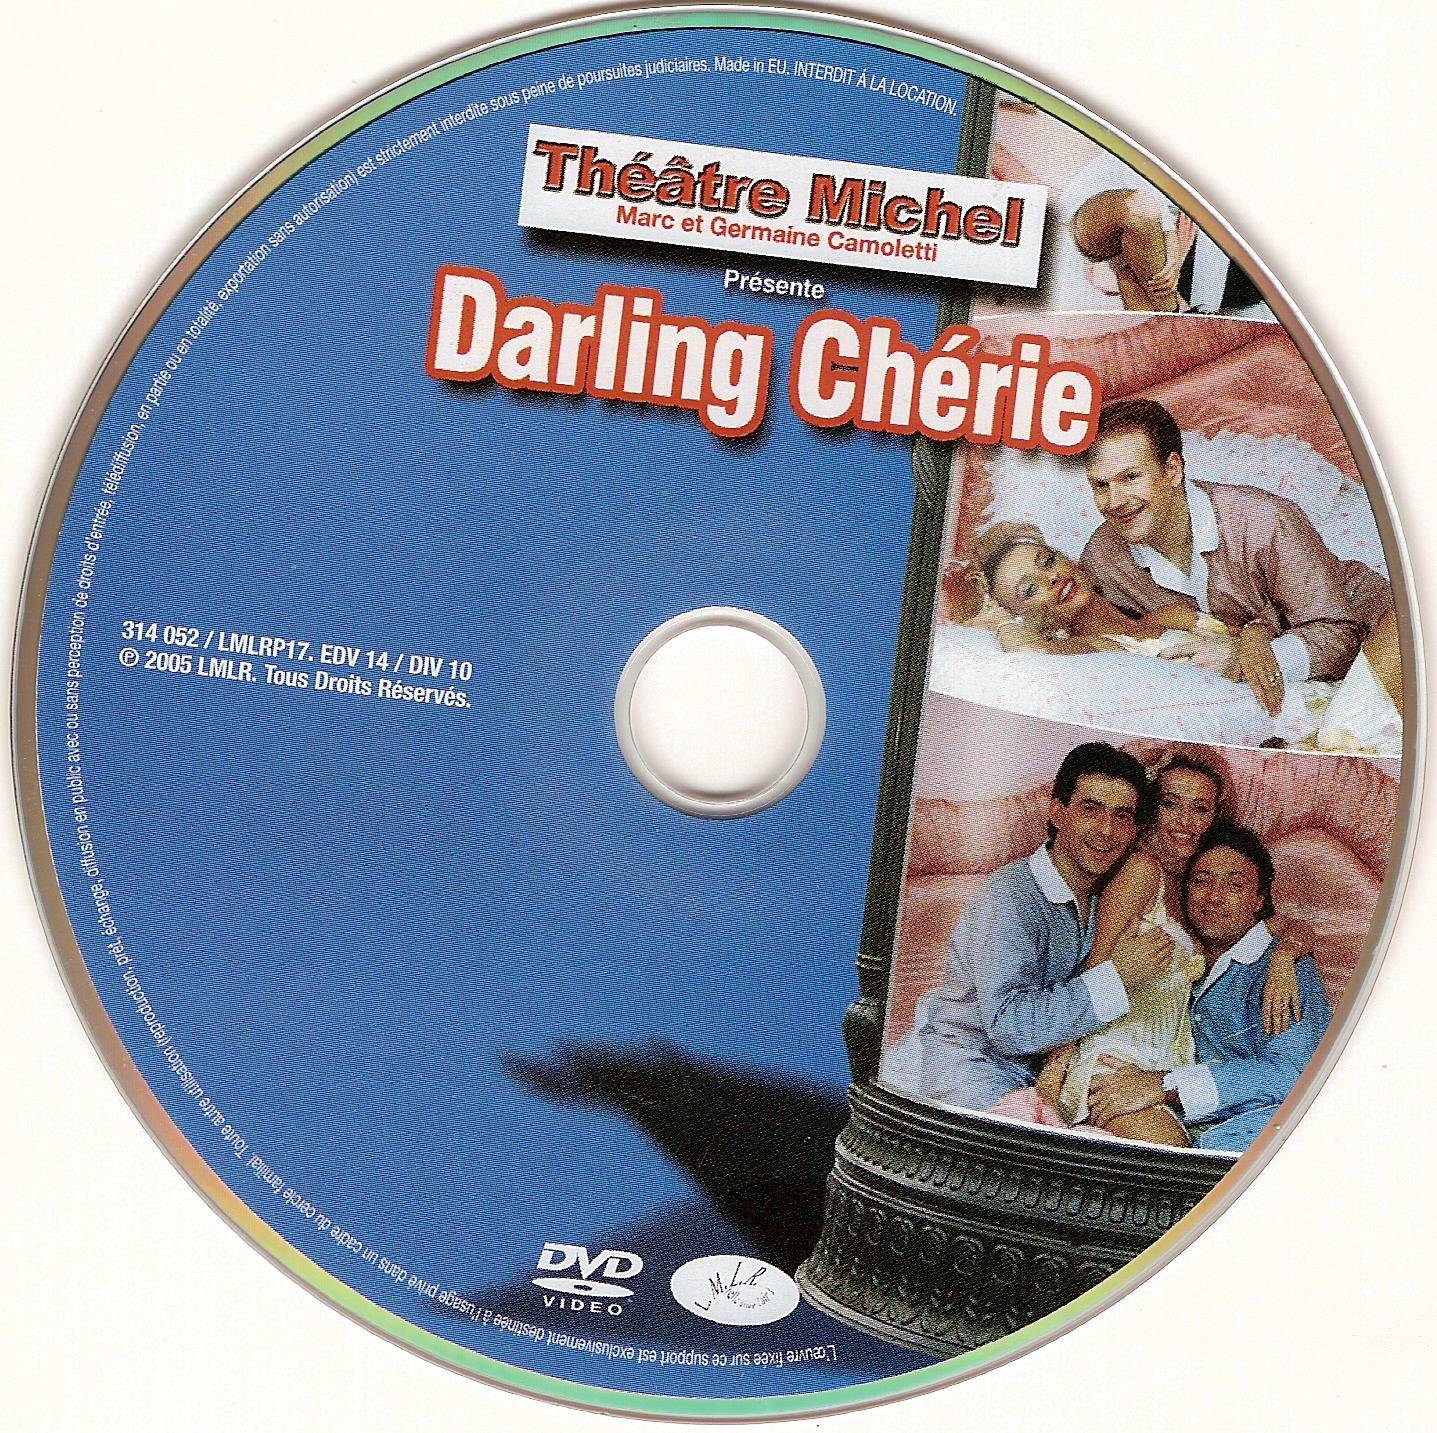 Darling chrie